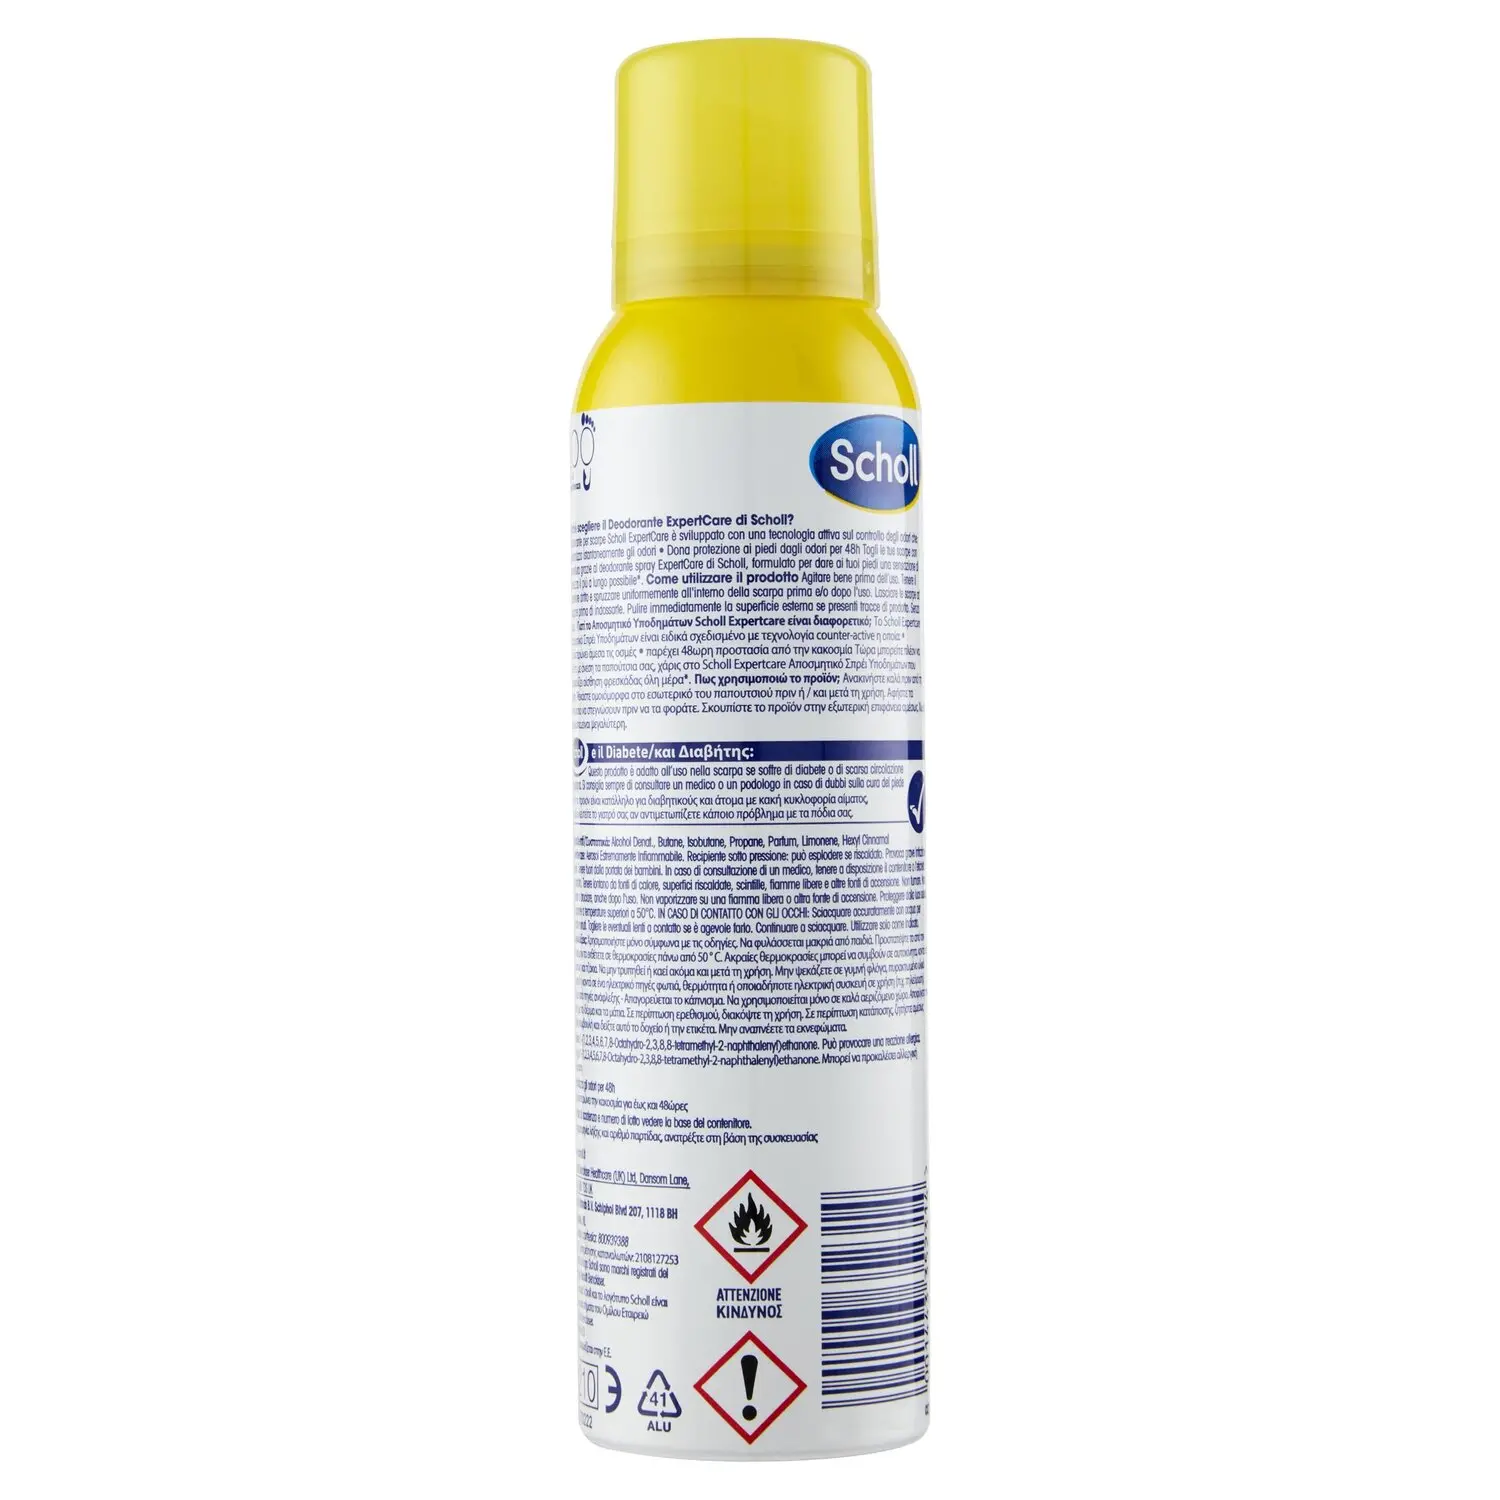 SCHOLL - Fresch Step - Deodorante Spray Per Scarpe 150 Ml